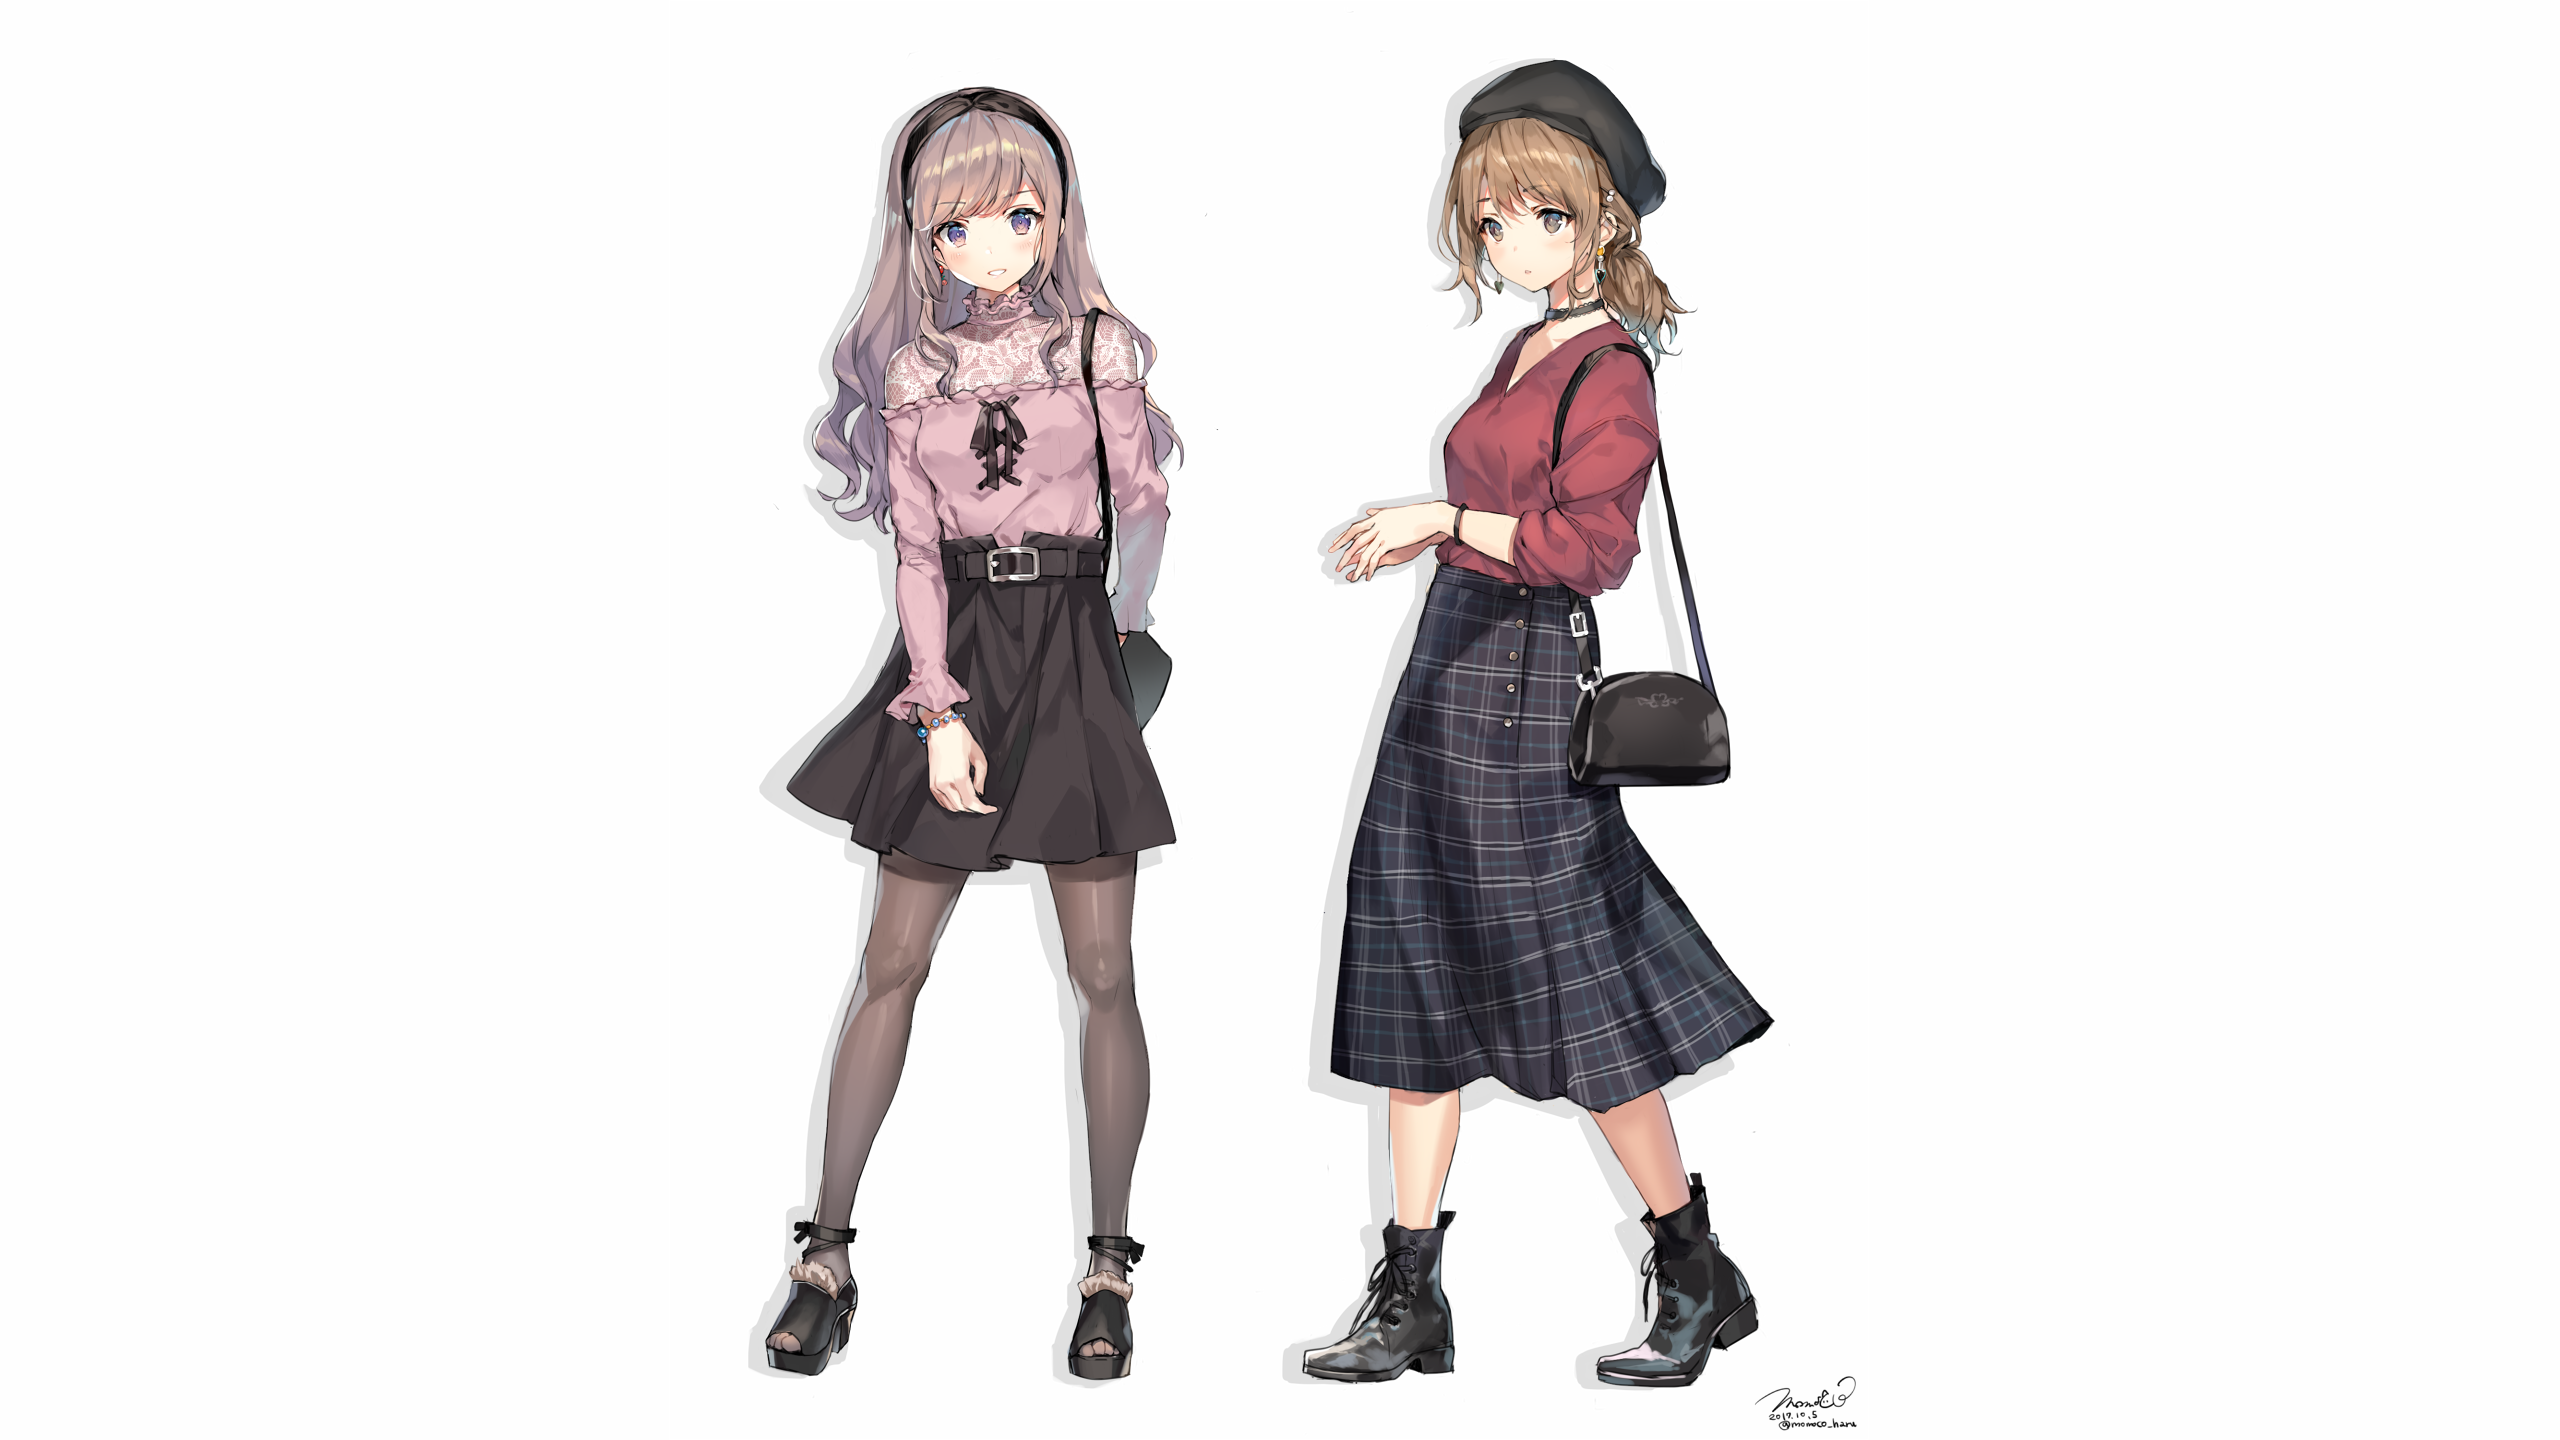 Anime Girls by モモコ